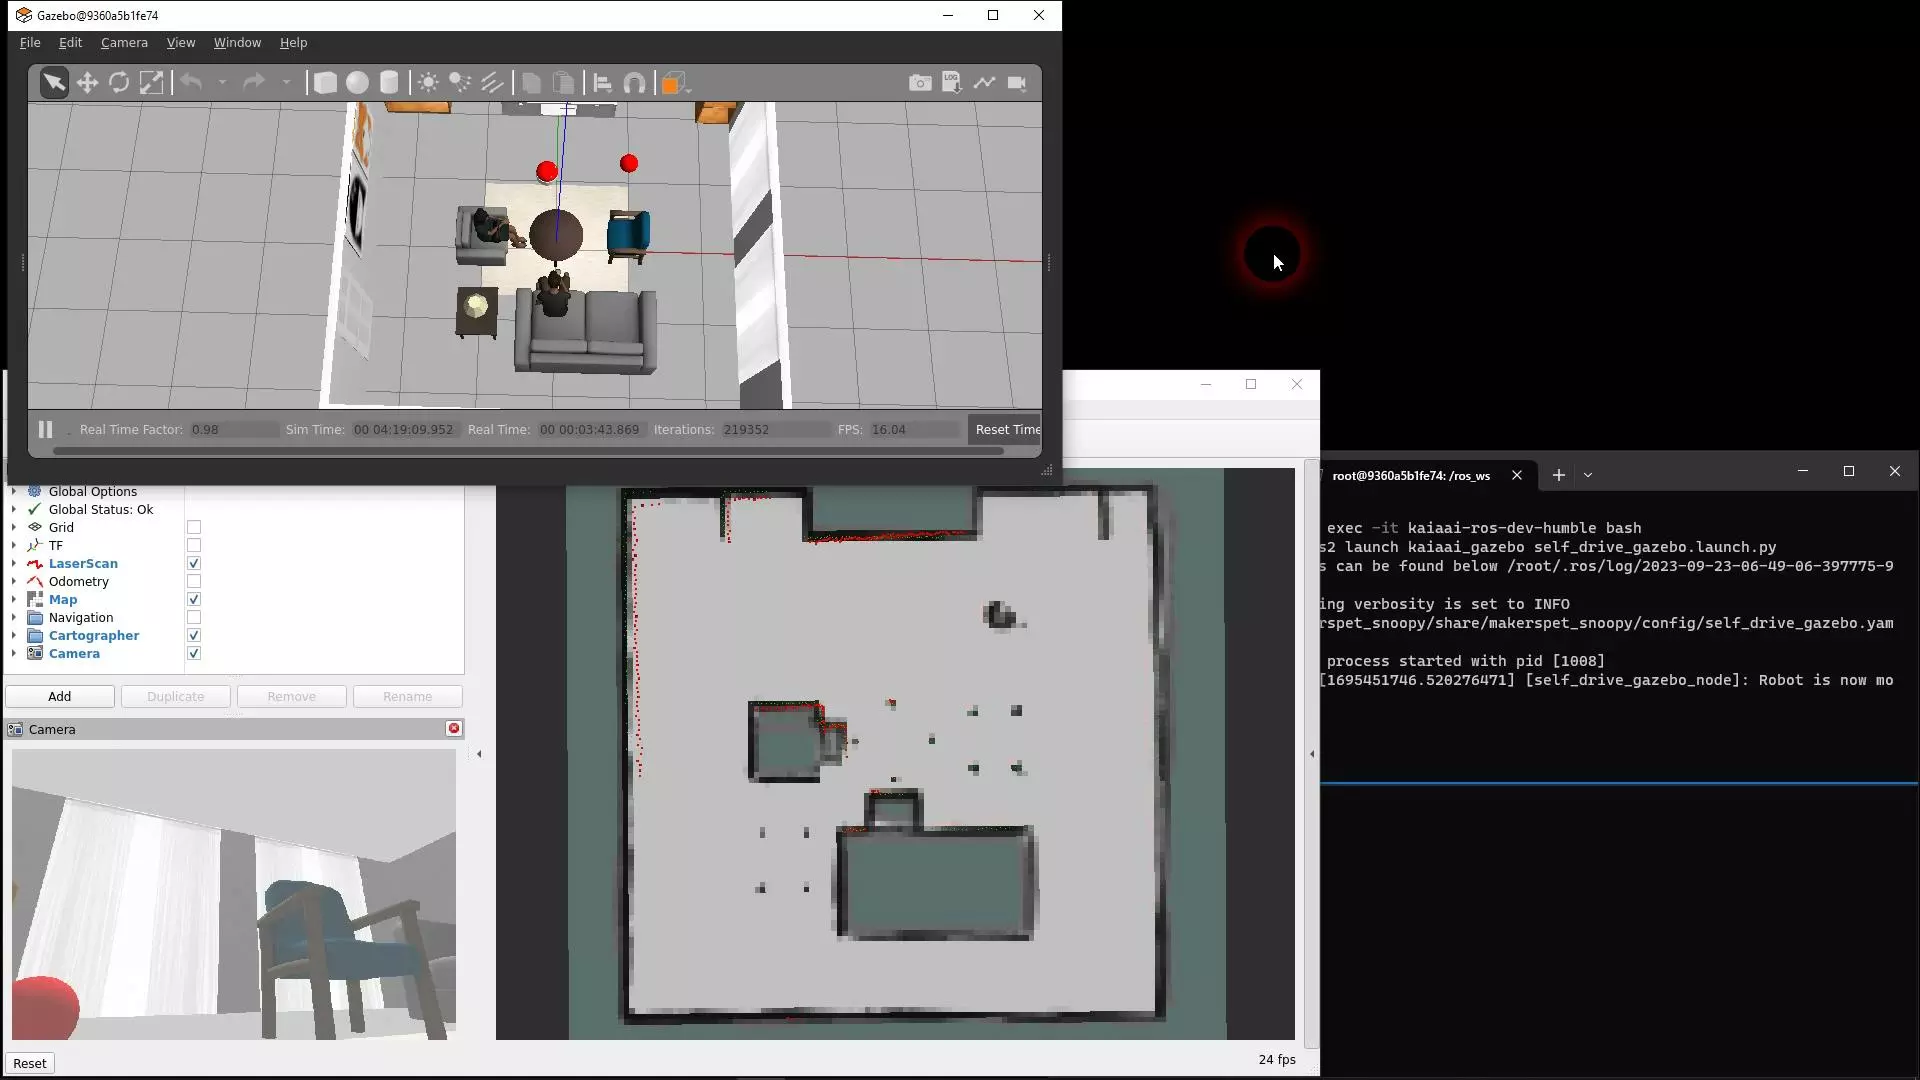 Demo: robot maps, navigates a living room in VR sim